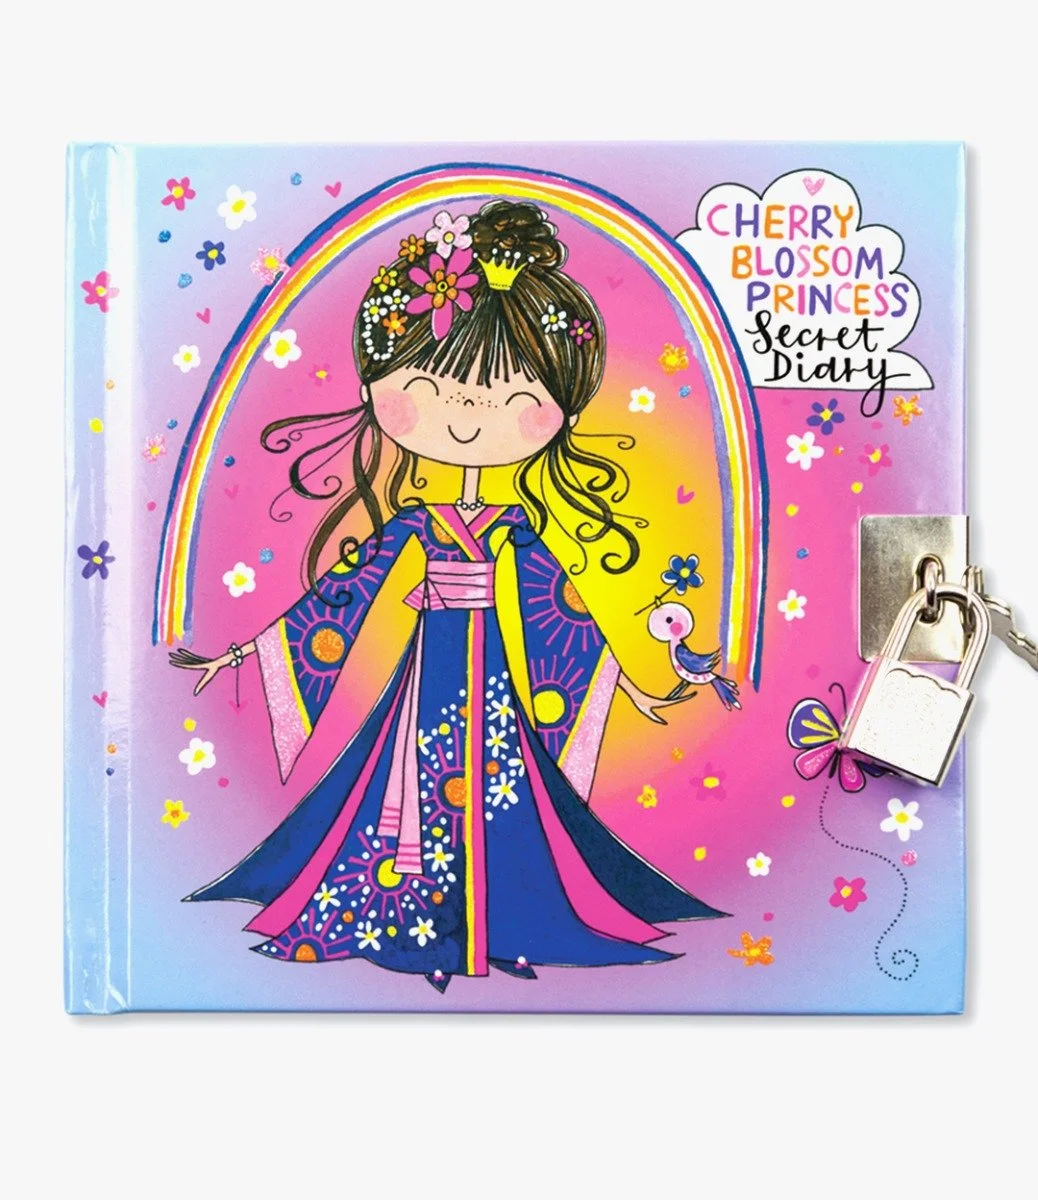 Secret Diary - Cherry Blossom Princess By Rachel Ellen Designs